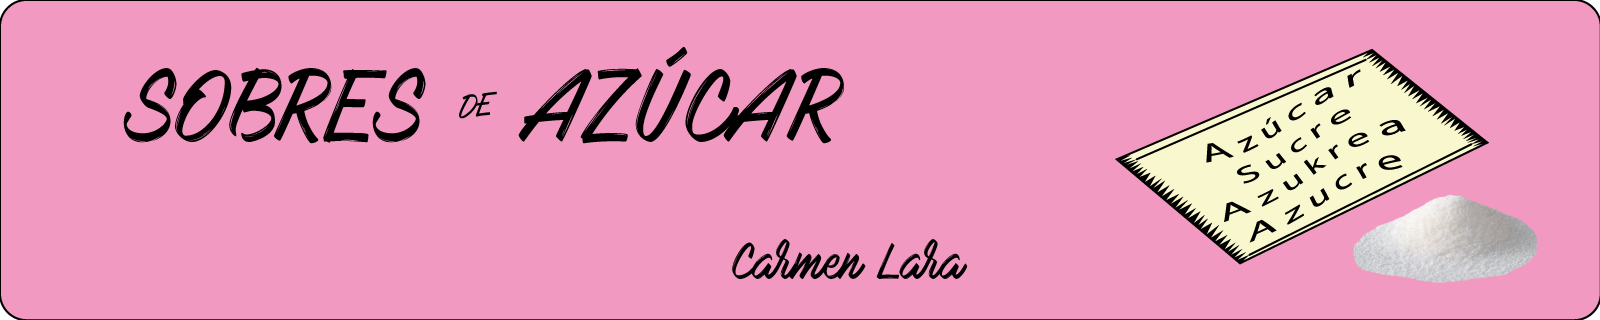 Sobres de azucar - Carmen Lara